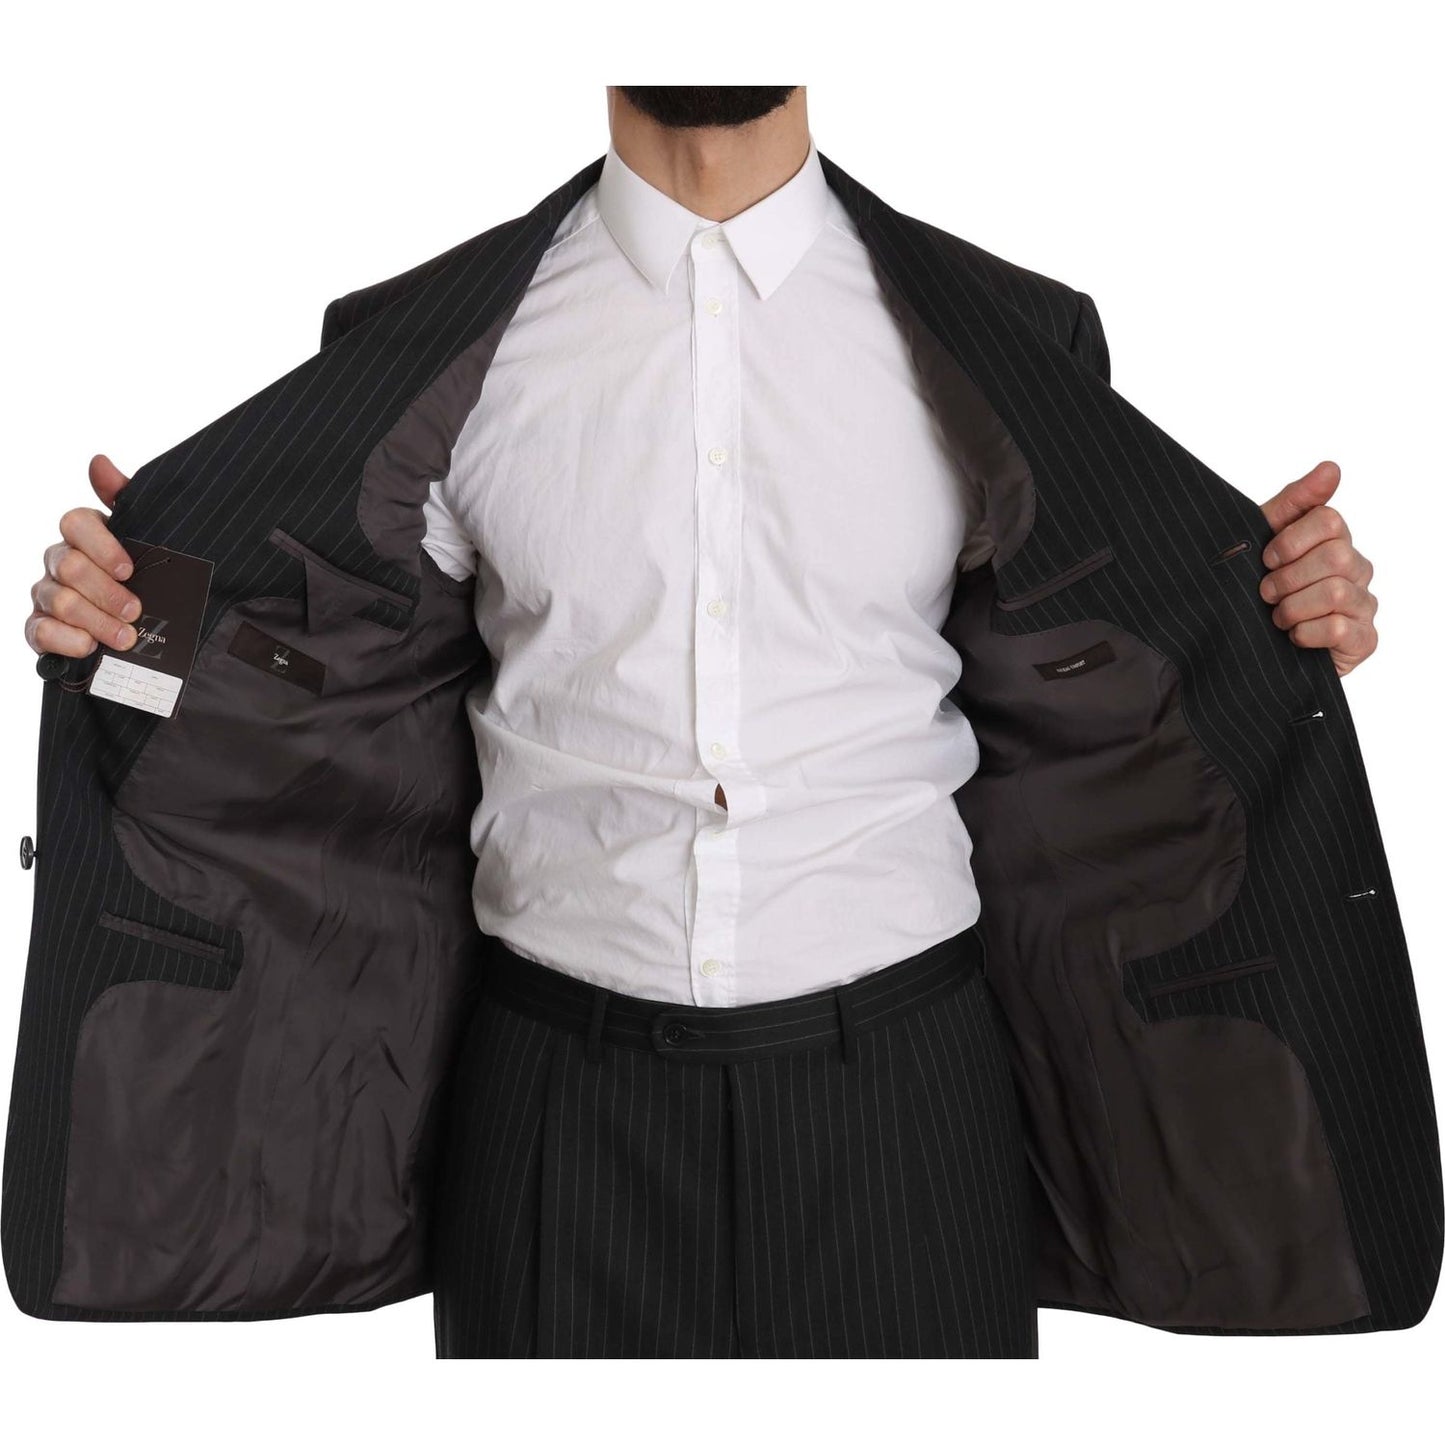 Z ZEGNA Elegant Black Striped Wool Suit Suit black-striped-two-piece-3-button-100-wool-suit IMG_7802-scaled.jpg